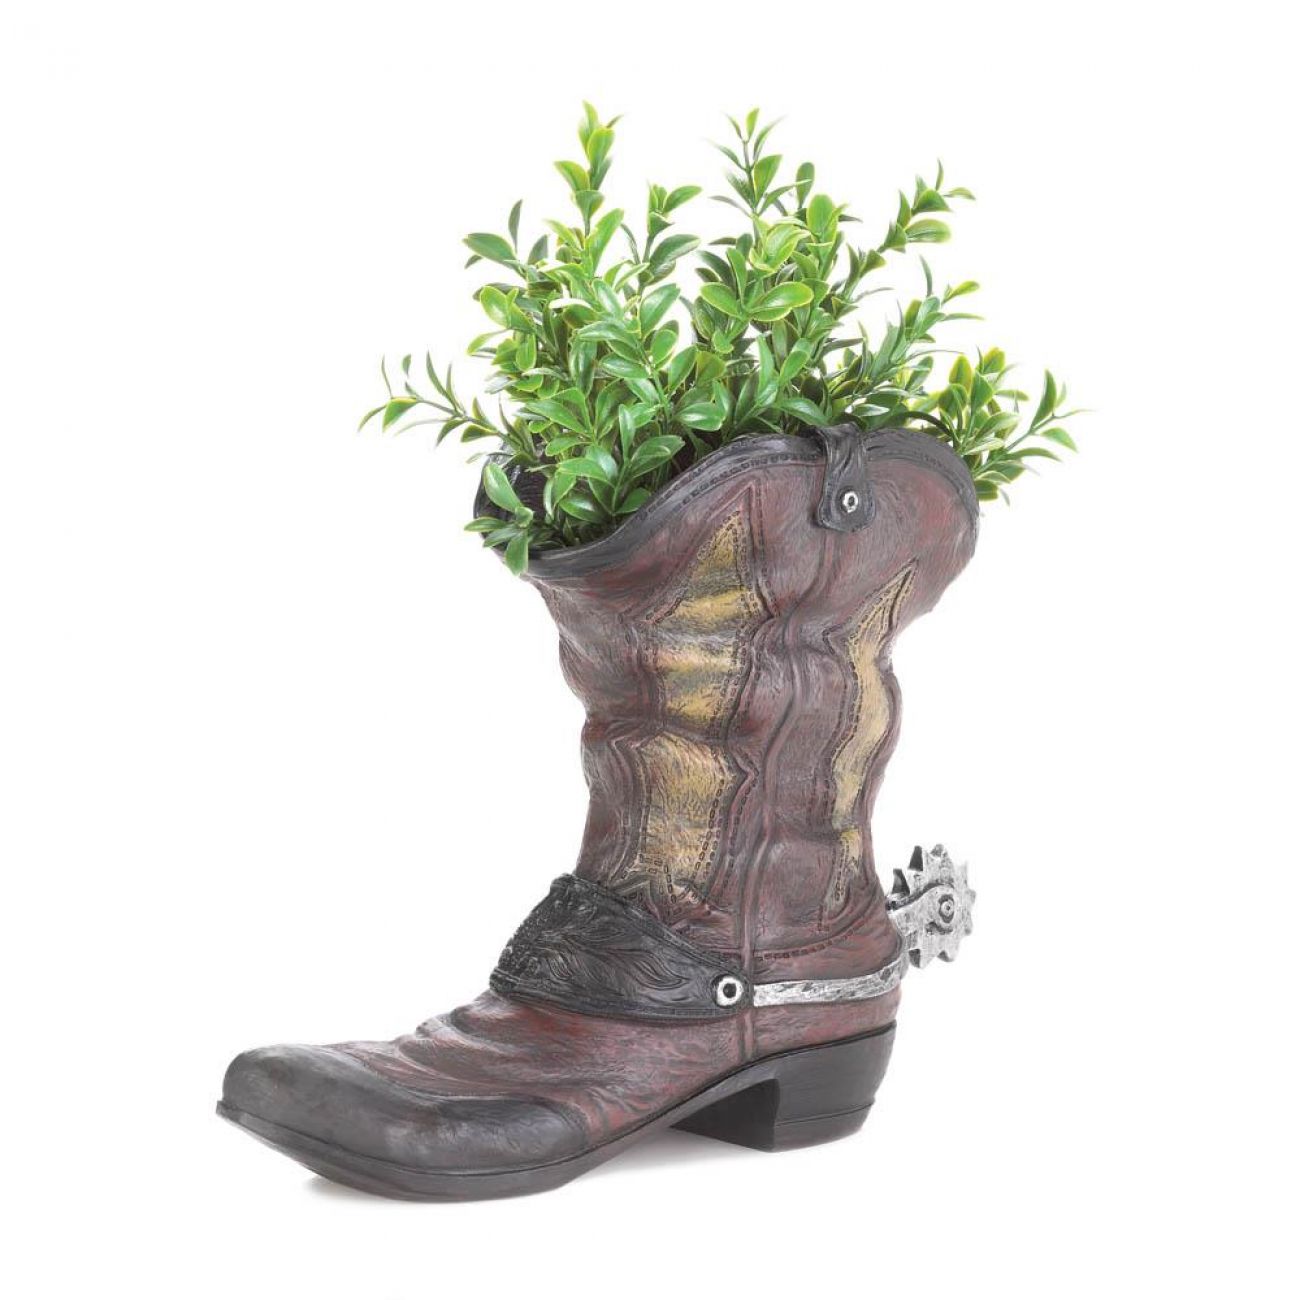 Spurred Cowboy Boot Planter